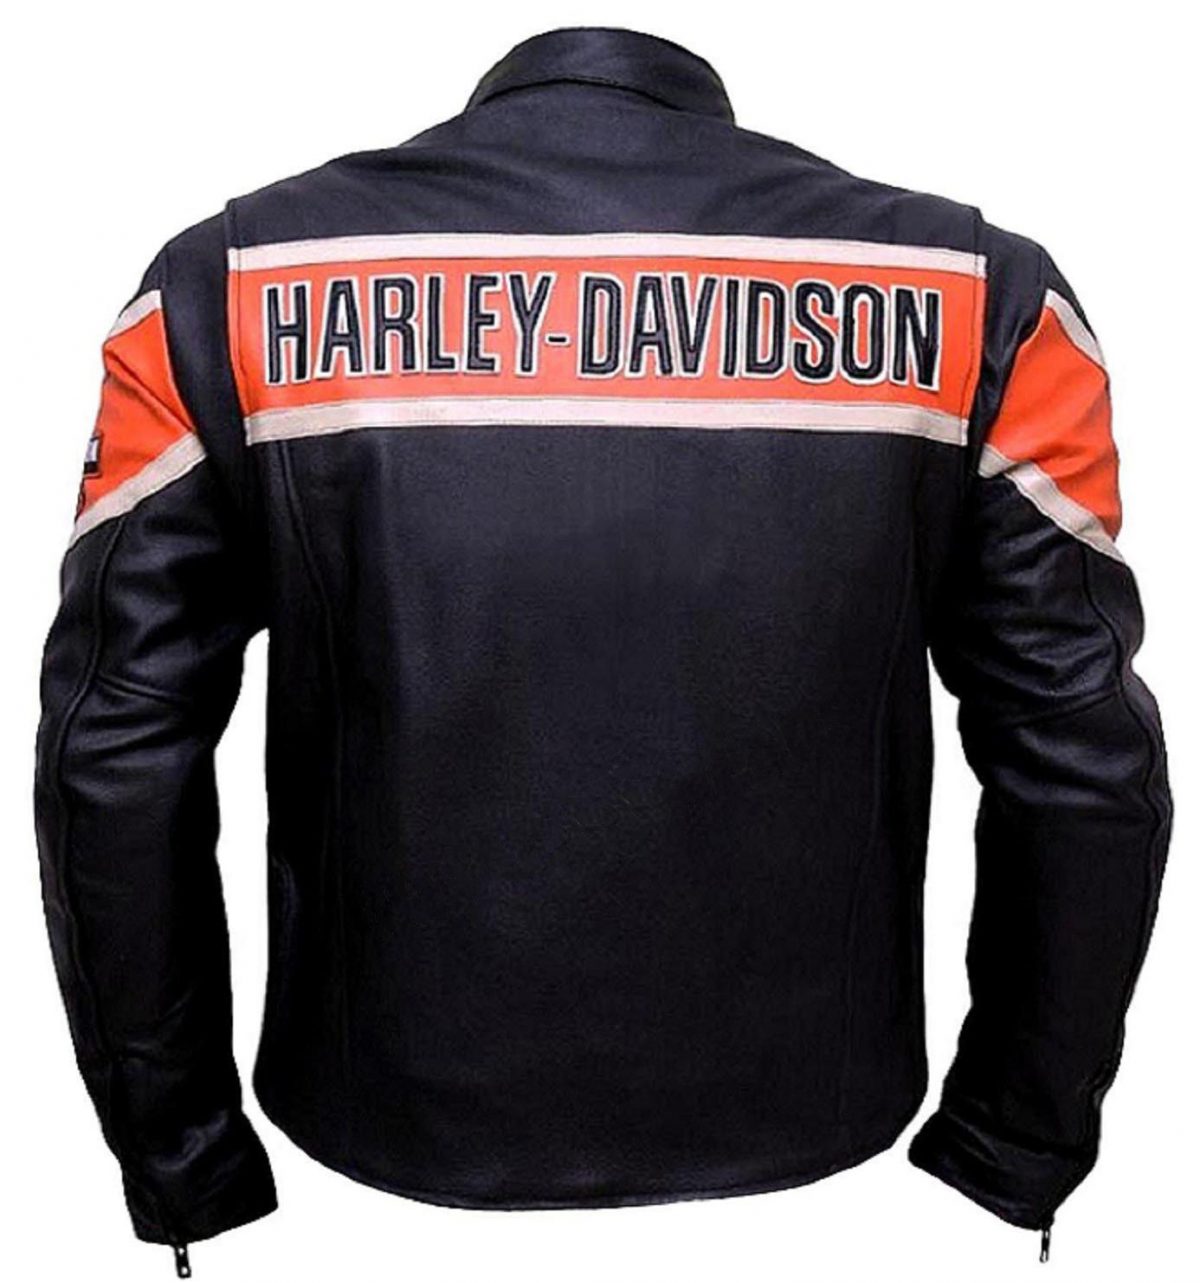 Harley Davidson Motorcycle Leather Jacket - Color Jackets